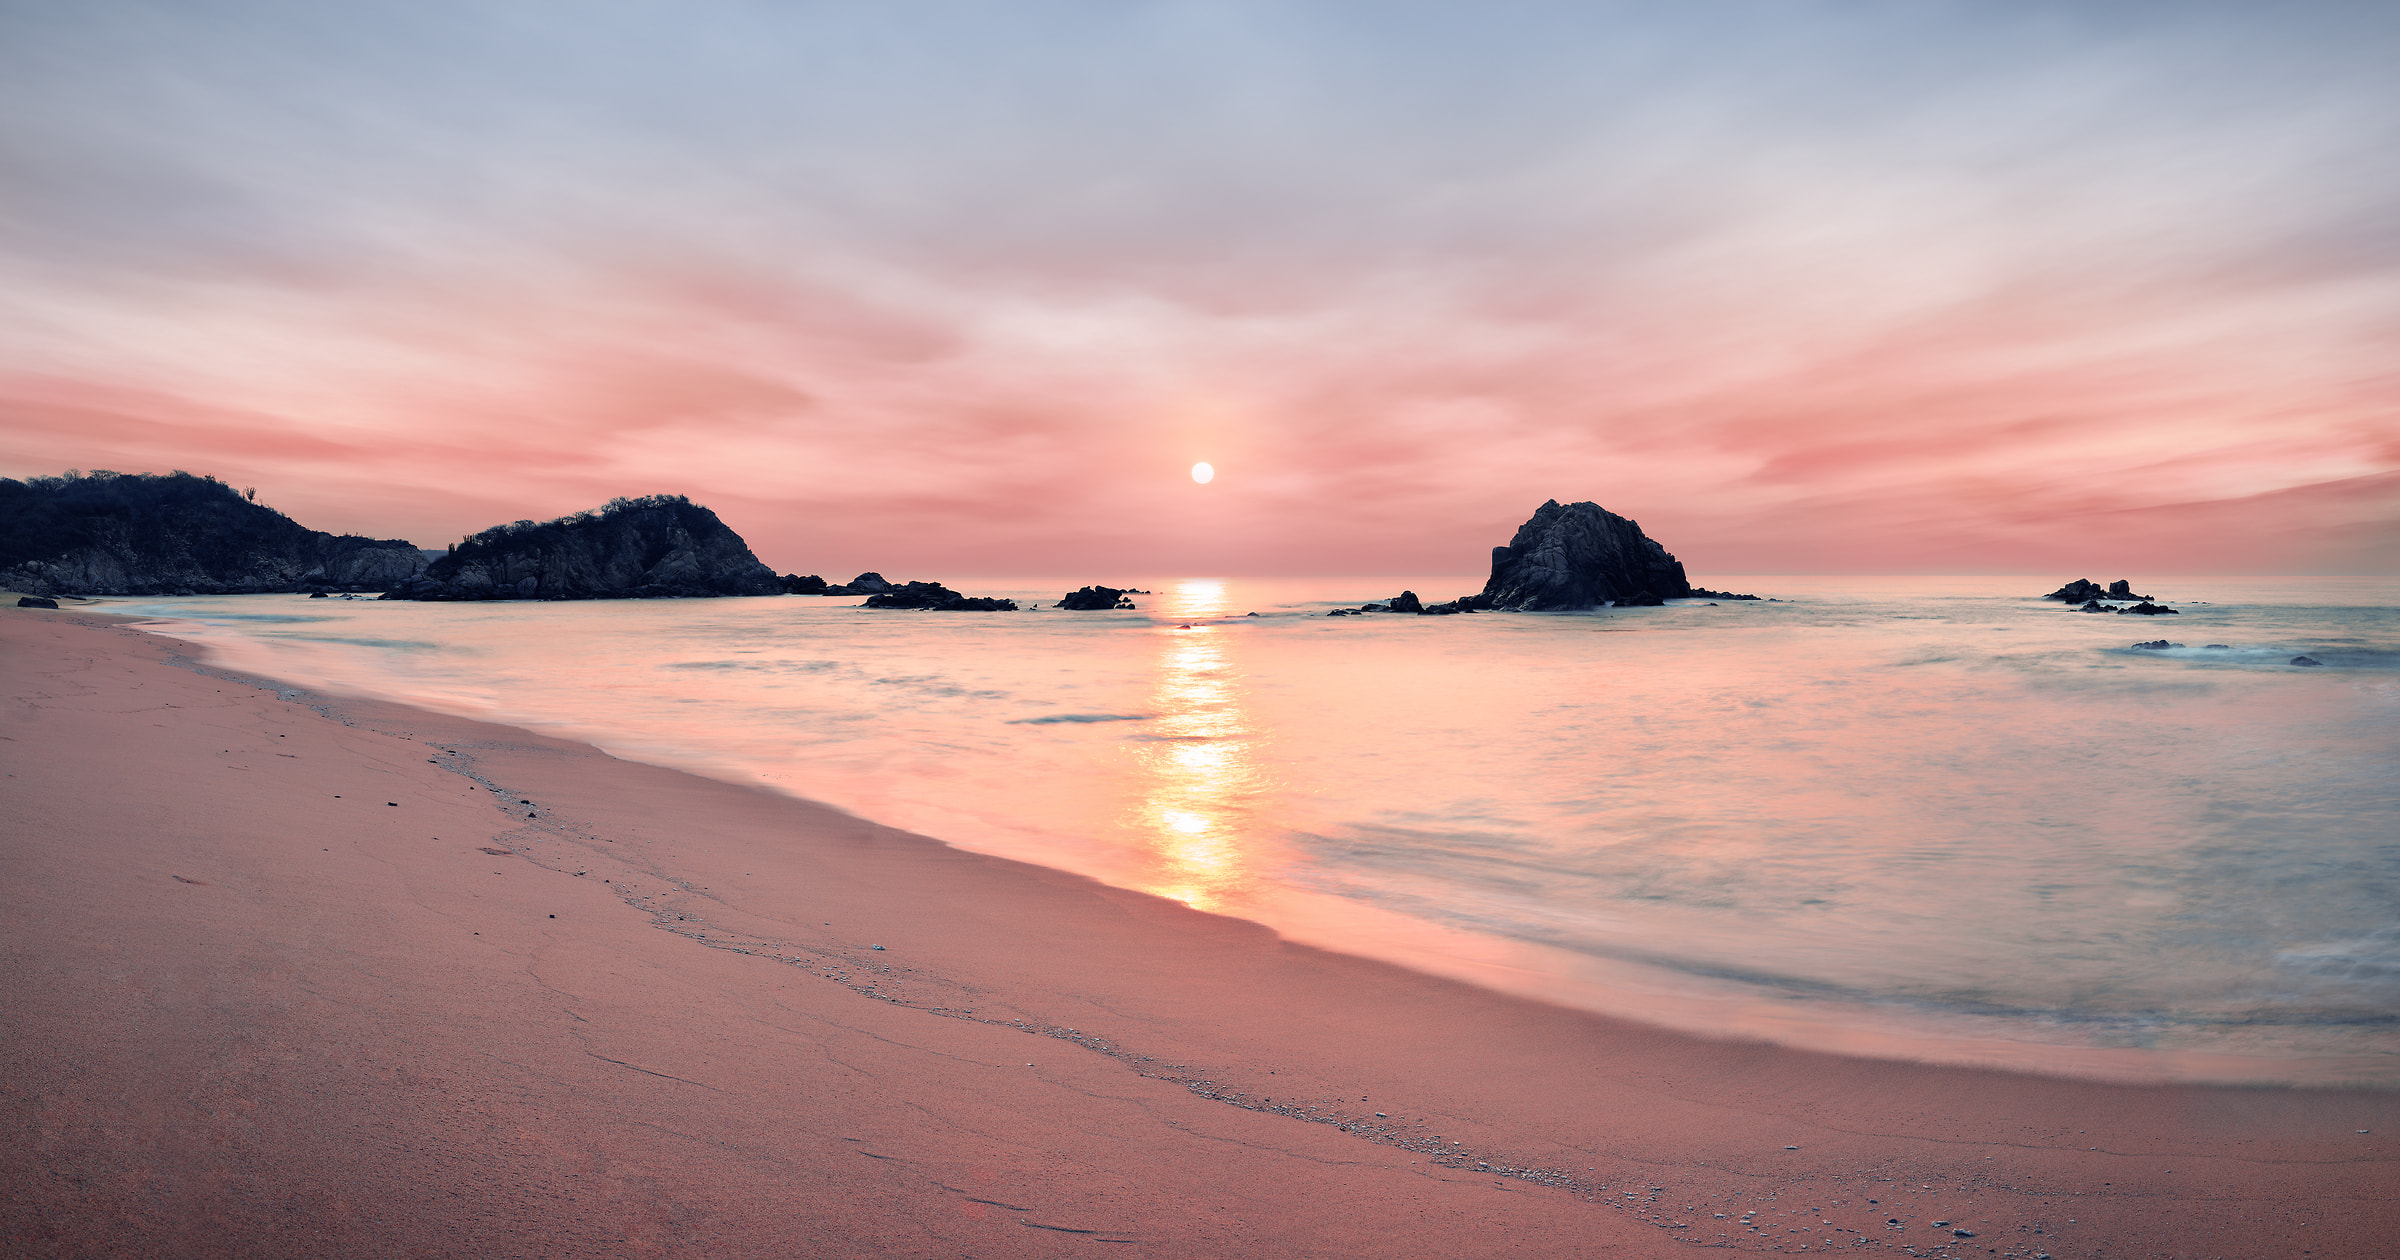 2400x1260 High resolution sunrise beach photos VAST